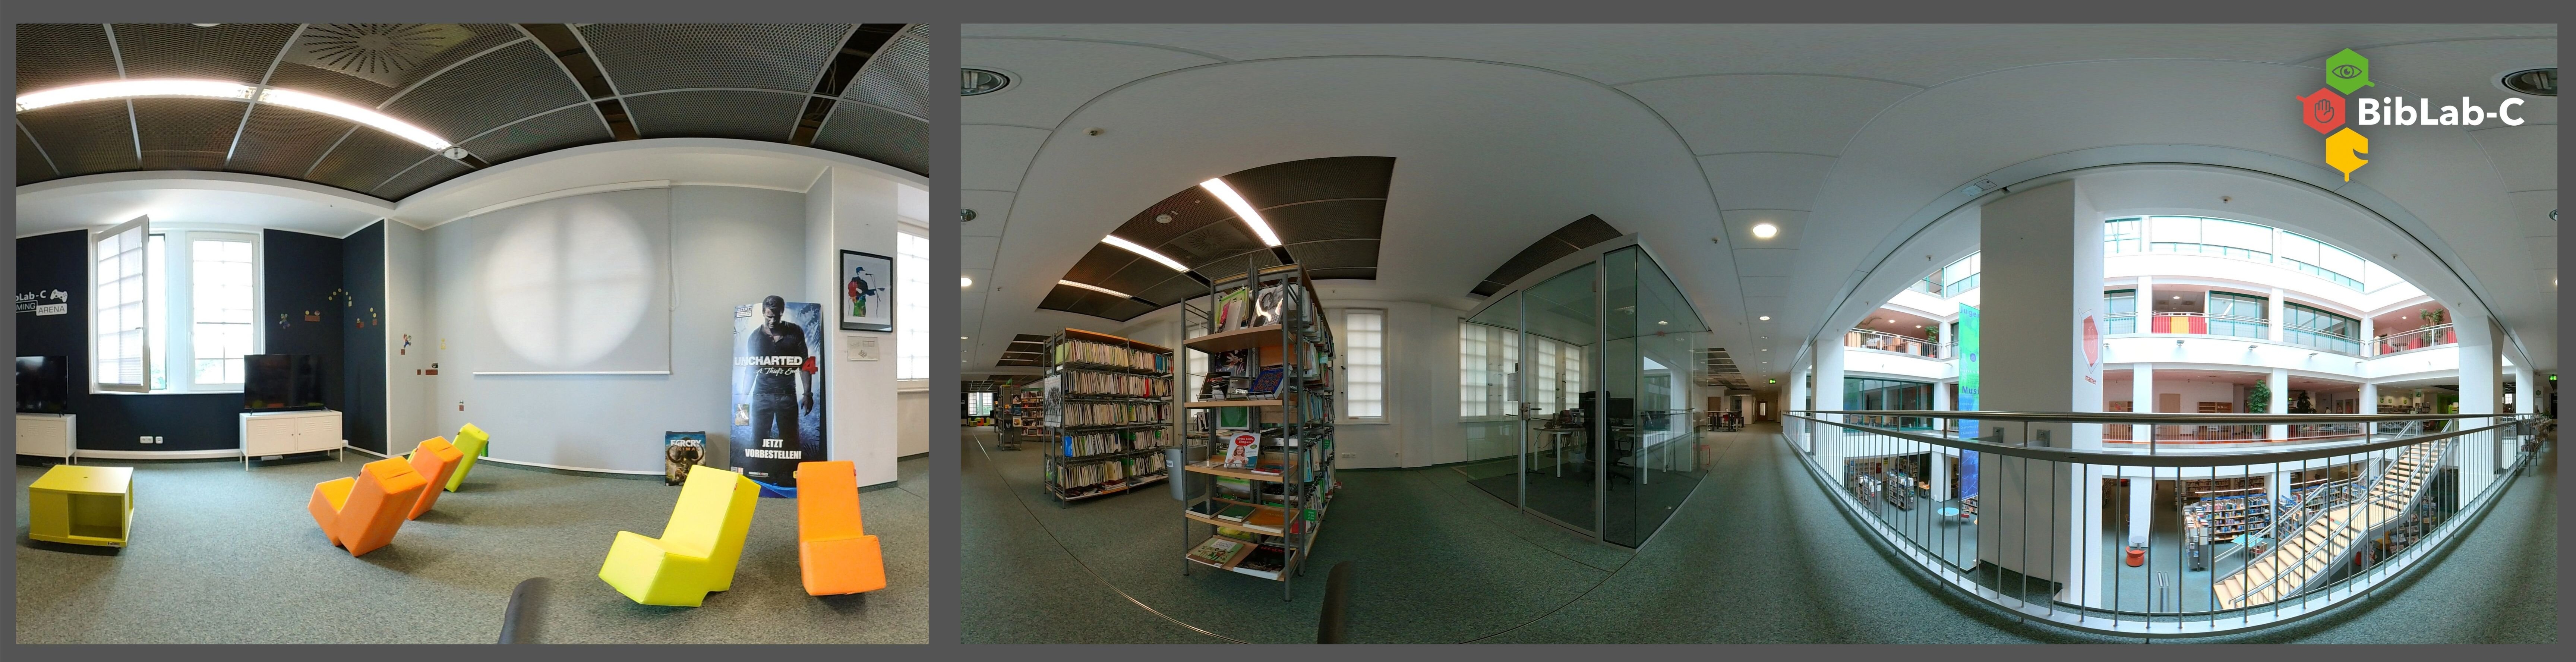 Räume des BibLab-C als 360 Grad Bild